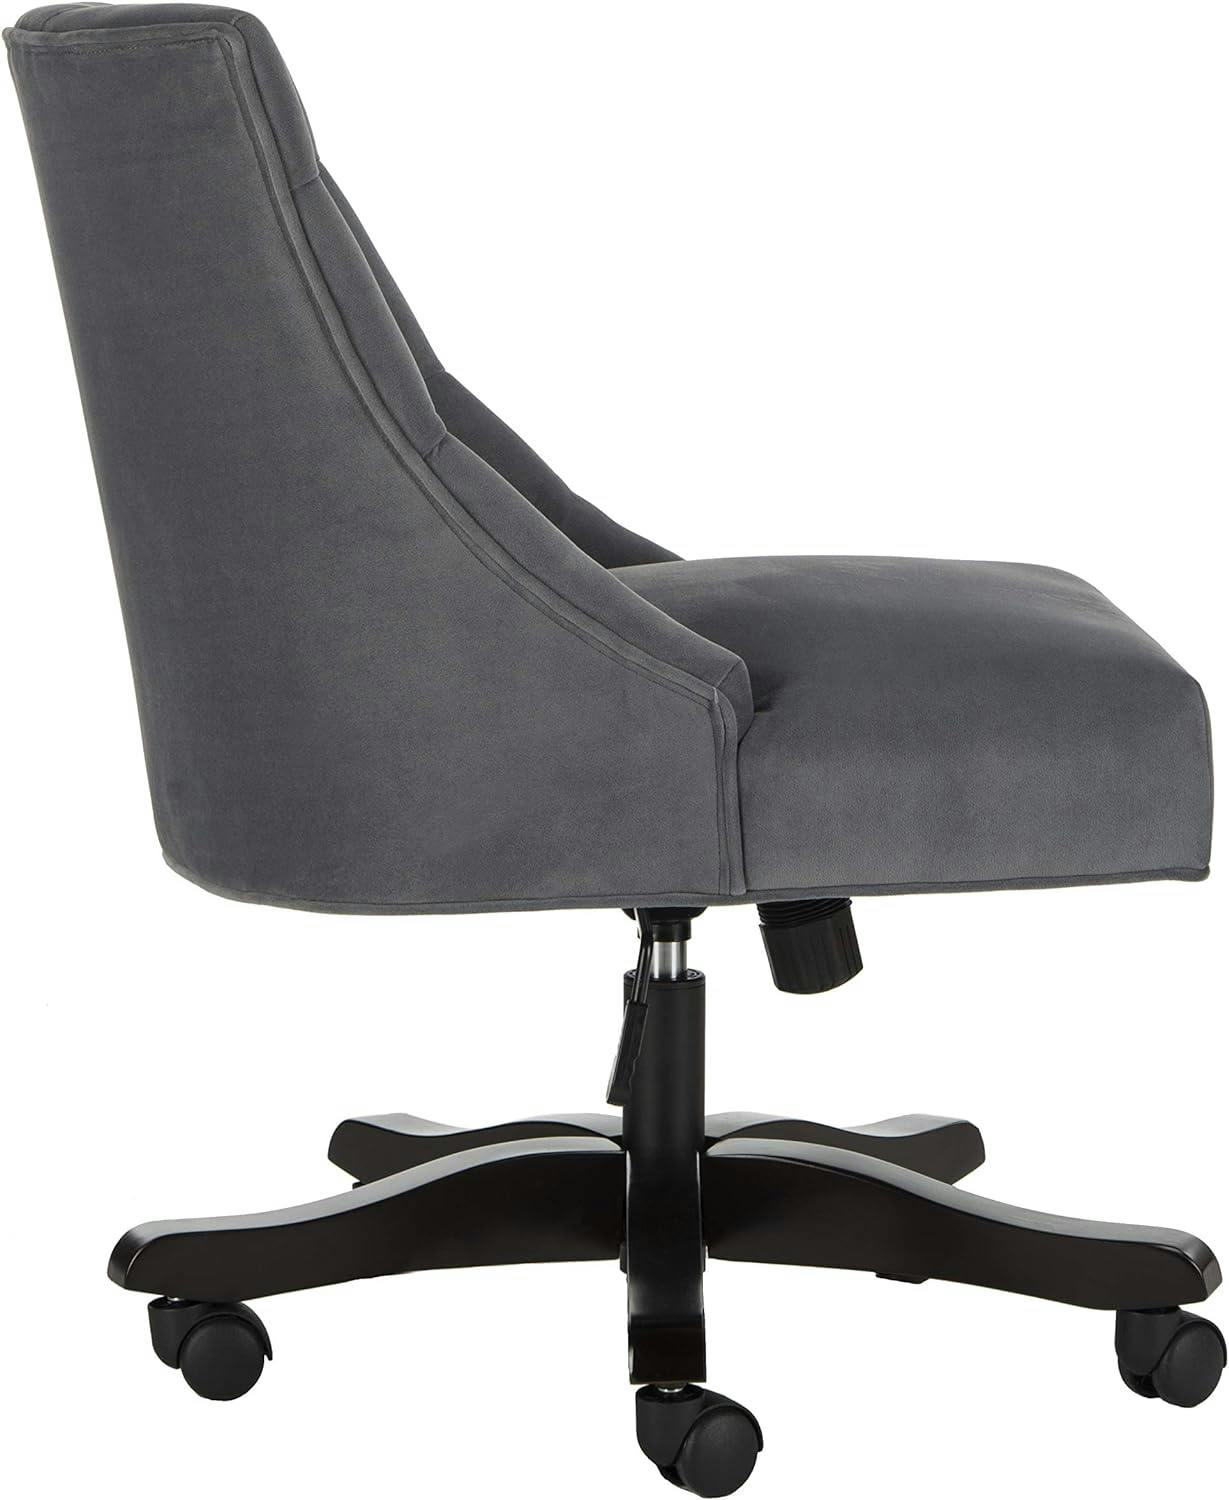 Elegant Gray Tufted Transitional Swivel Desk Chair in Wood Finish